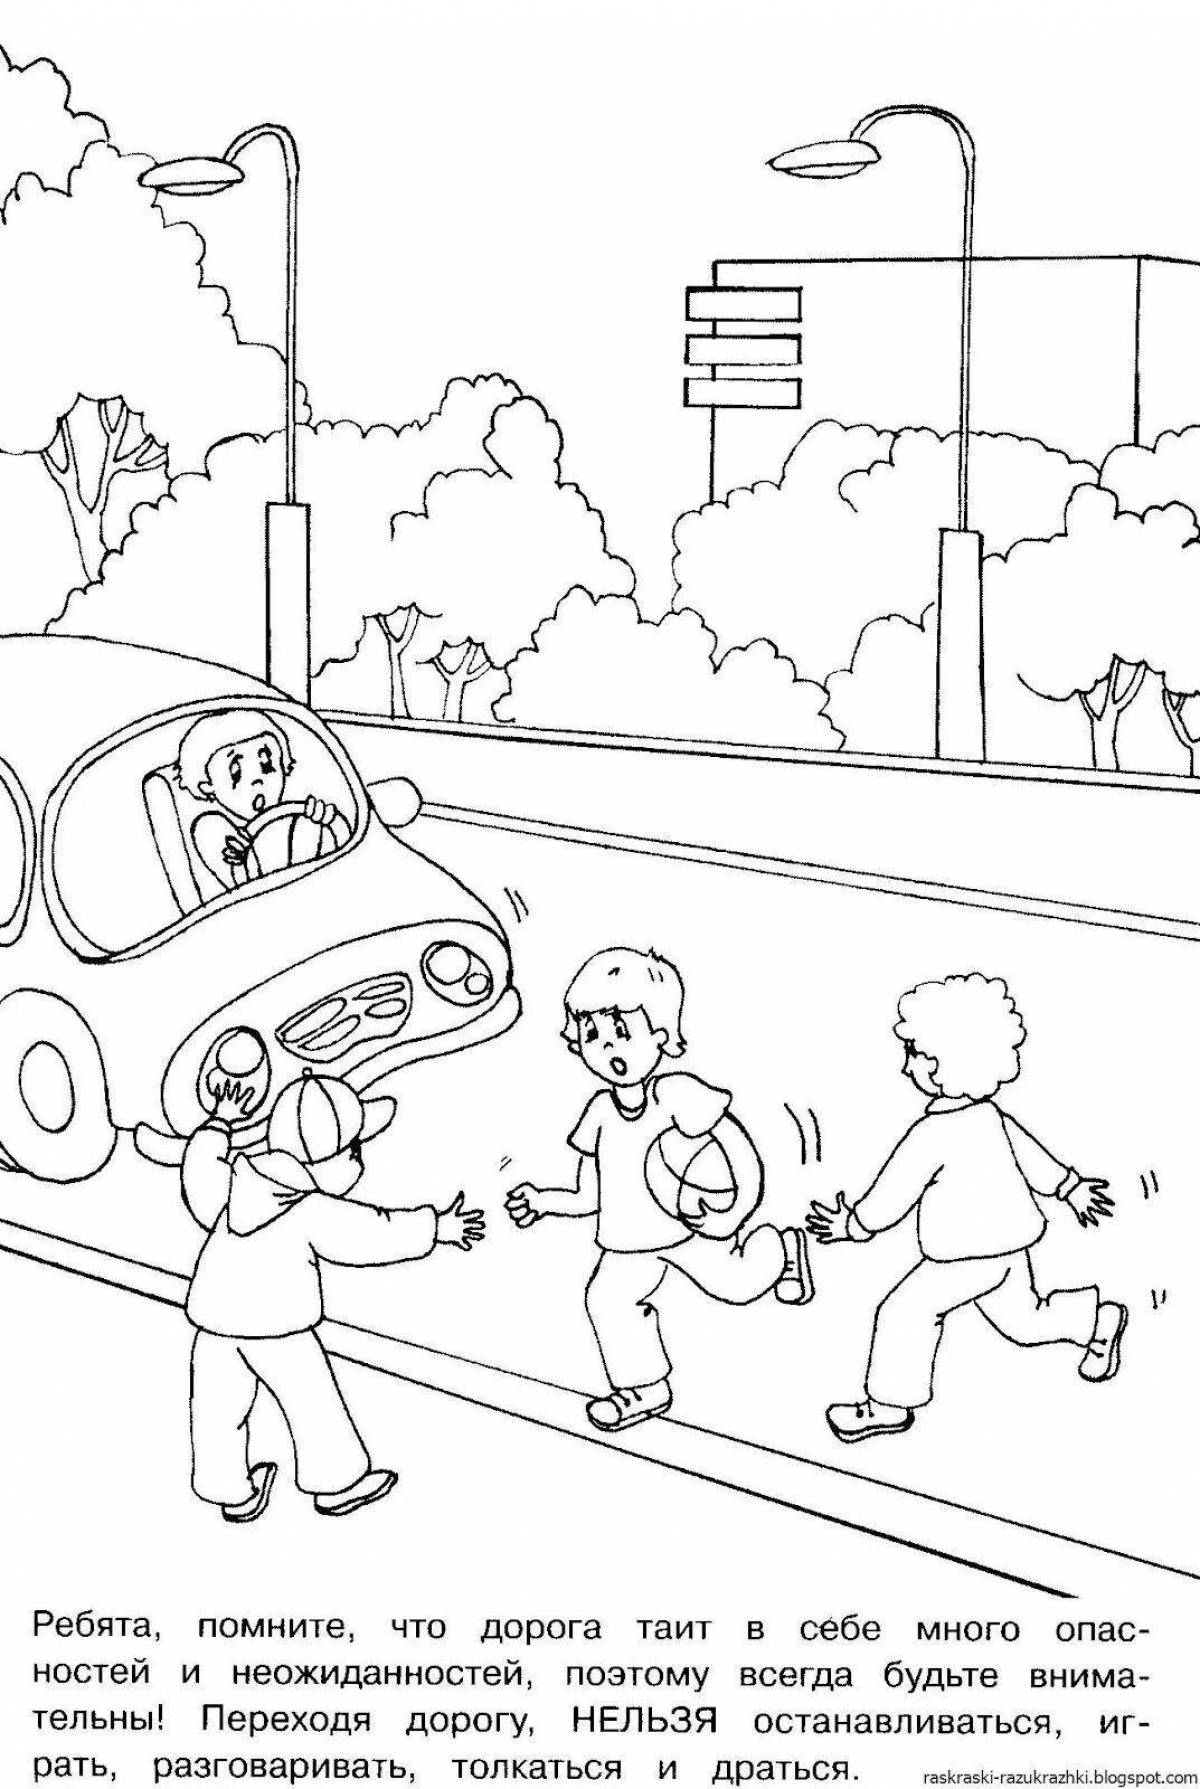 Coloring book inspiring traffic safety